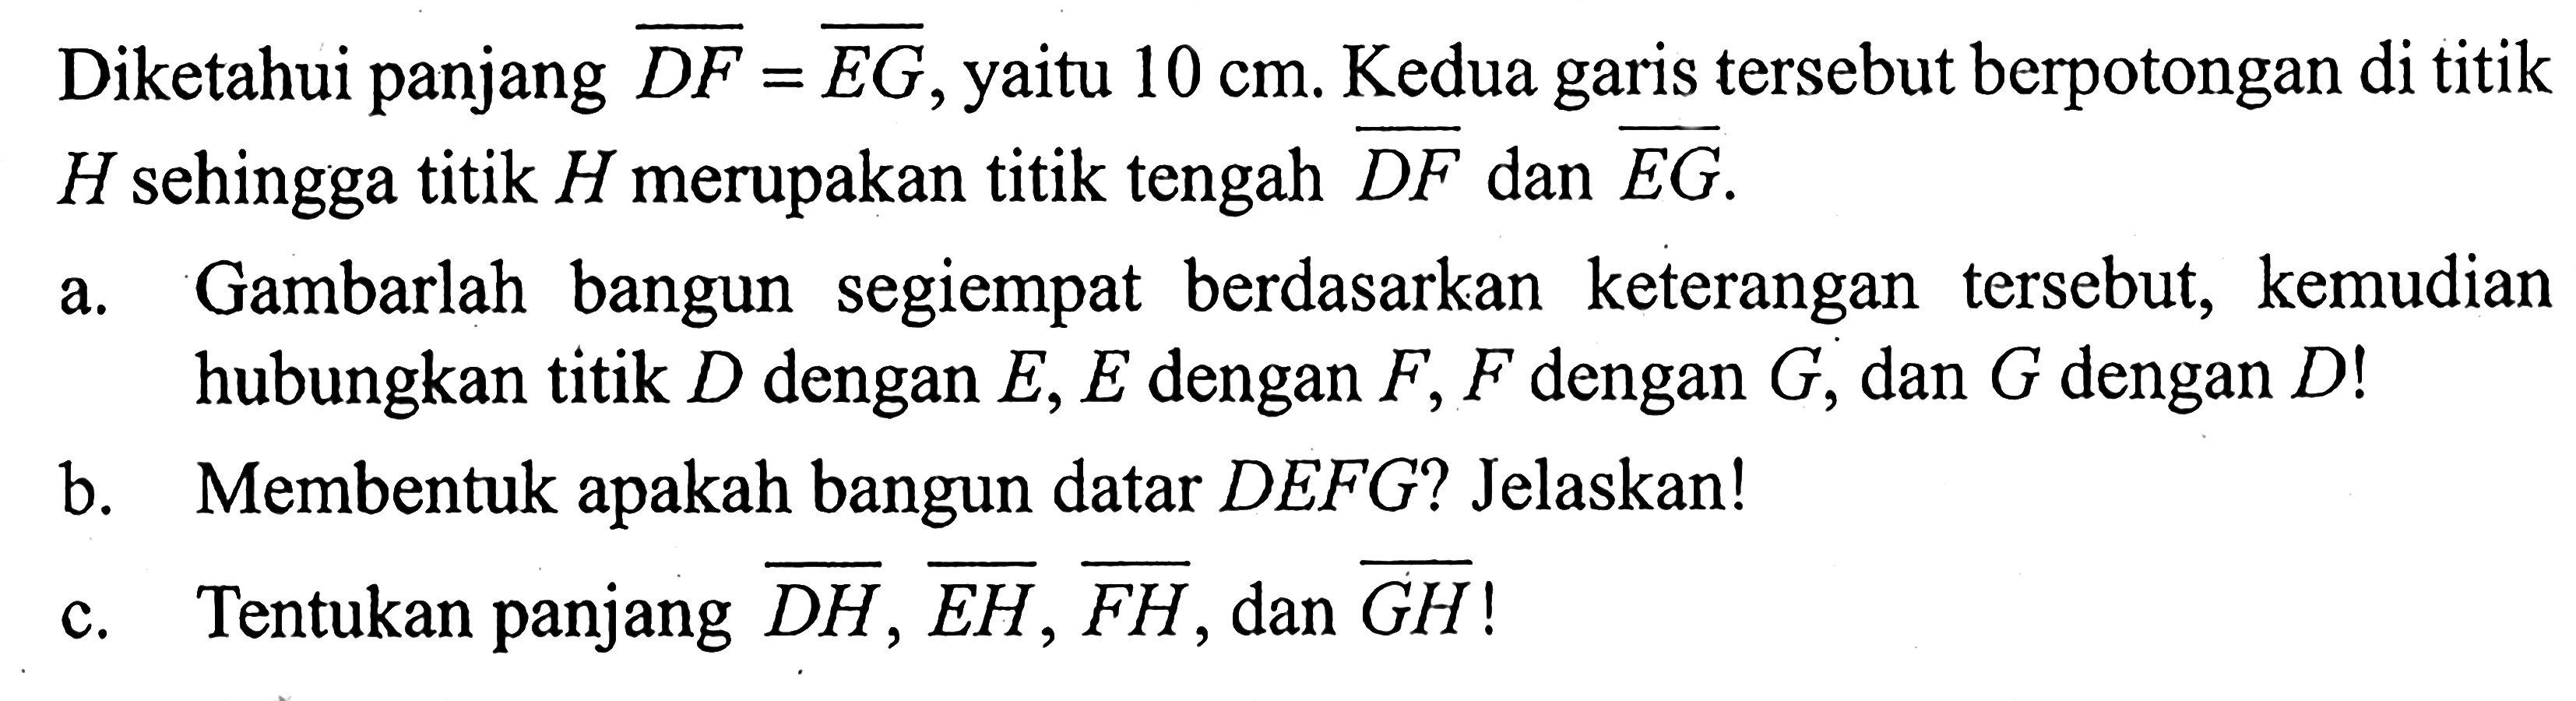 Diketahui panjang DF=EG, yaitu 10 cm. Kedua garis tersebut berpotongan di titik H sehingga titik H merupakan titik tengah DF dan EG.a. Gambarlah bangun segiempat berdasarkan keterangan tersebut, kemudian hubungkan titik D dengan E, E dengan F, F dengan G, dan G dengan D! b. Membentuk apakah bangun datar DEFG? Jelaskan!c. Tentukan panjang DH, EH, FH, dan GH!